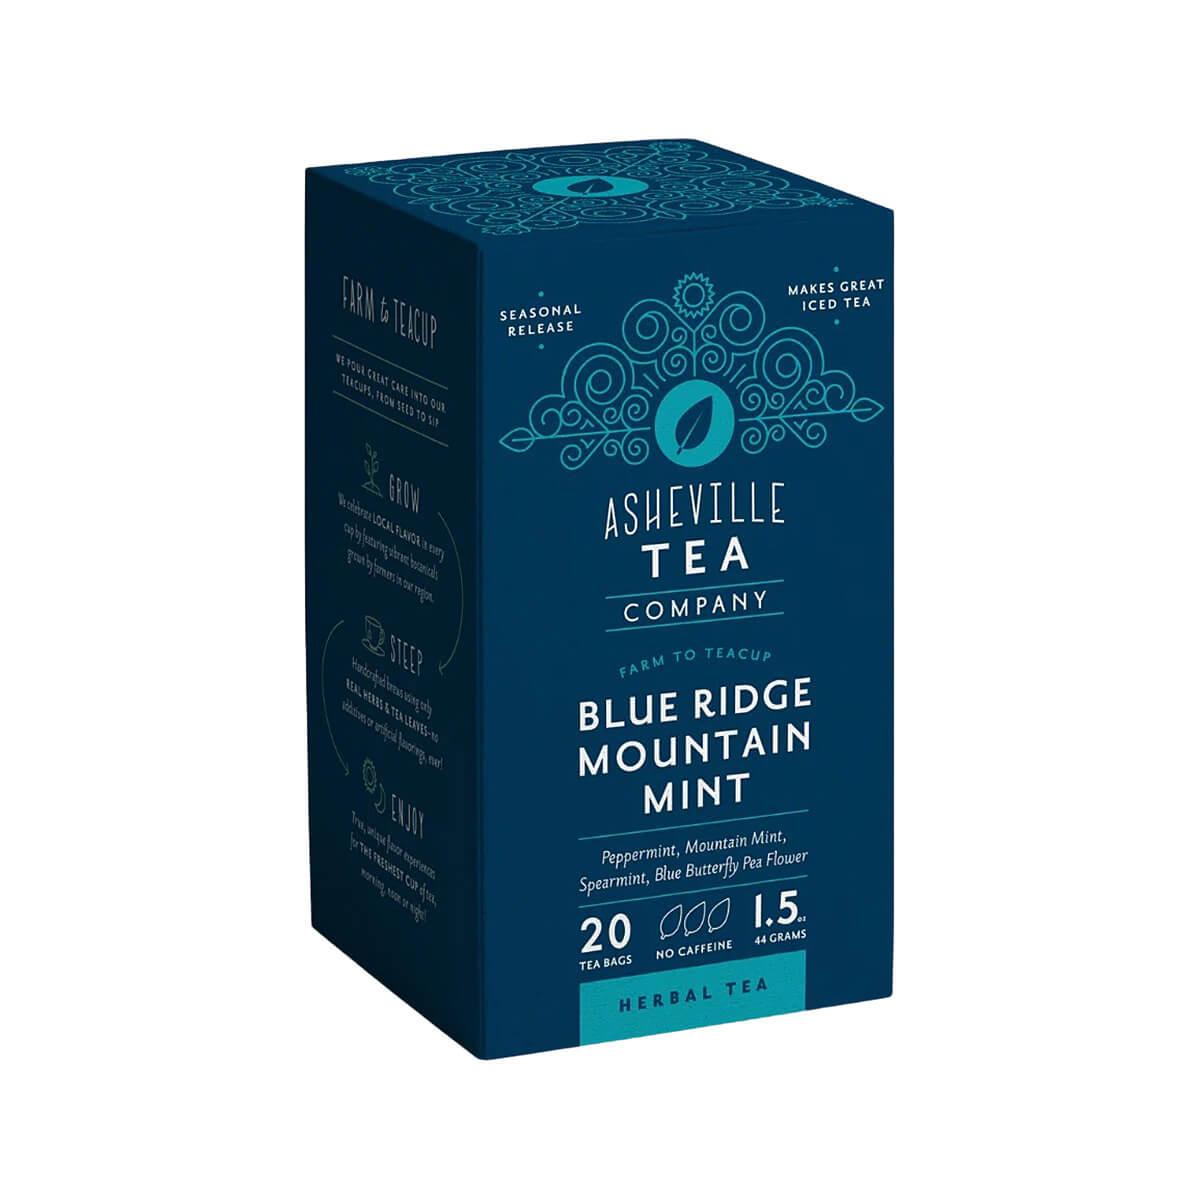  Blue Ridge Mountain Mint Tea - 20 Tea Bag Box